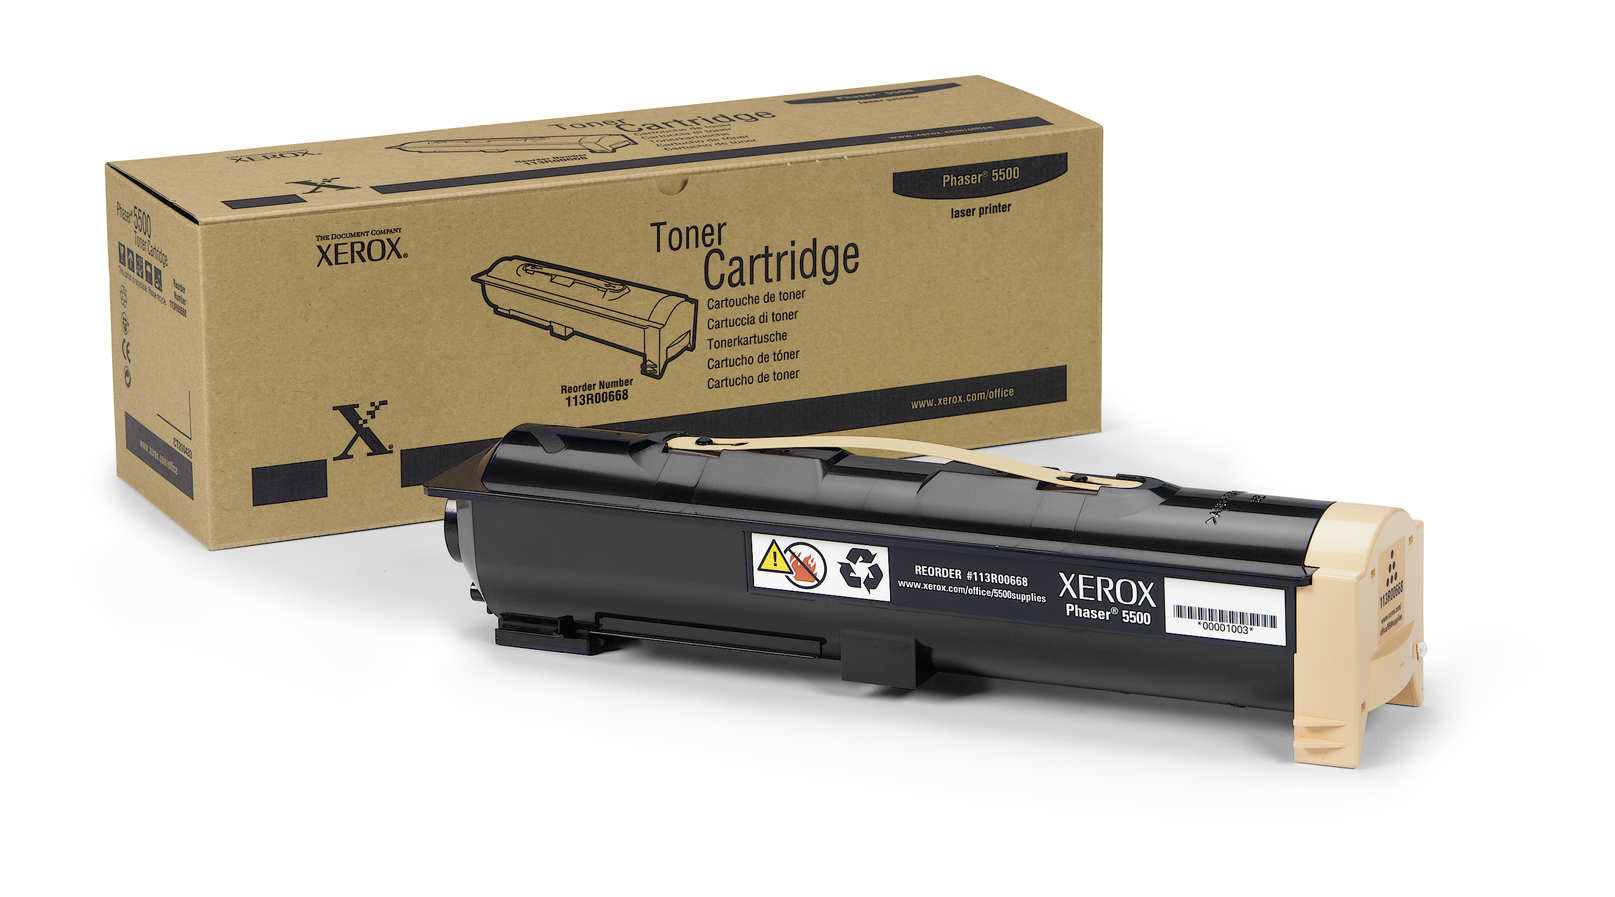 Toner Cartridge Phaser 5500 (30K) 113R00668 Genuine Xerox Supplies